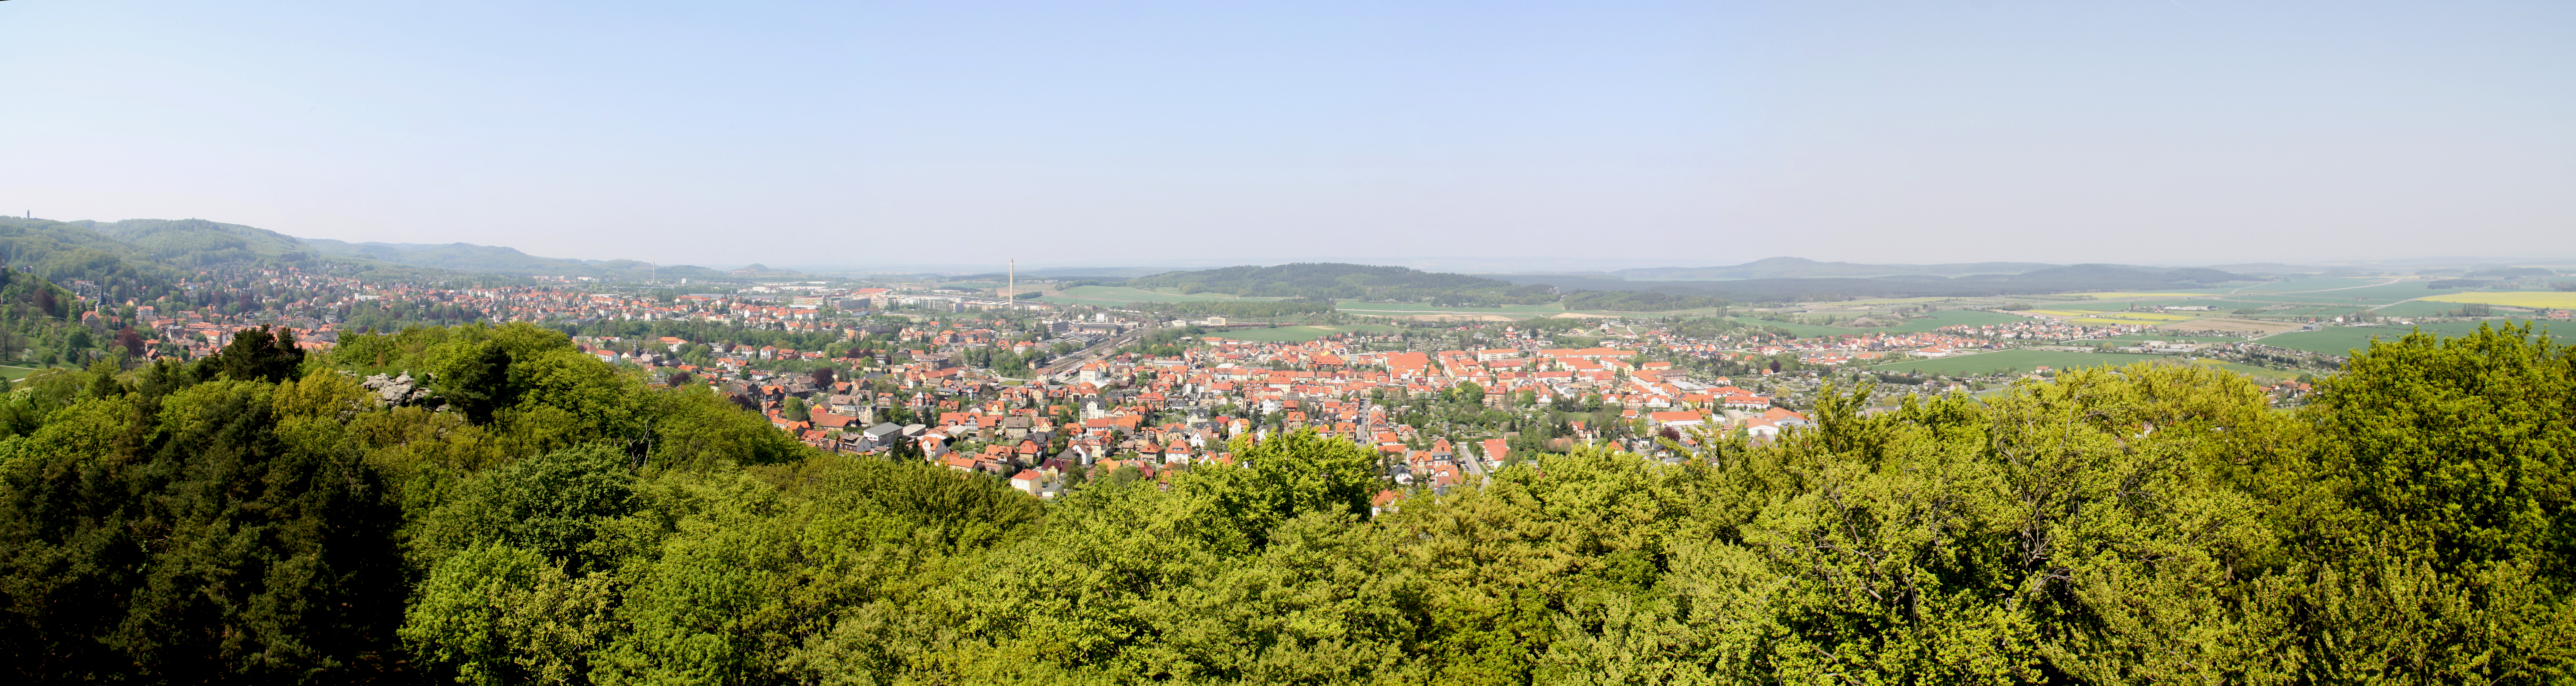 Blankenburg Harz Panorama.jpg